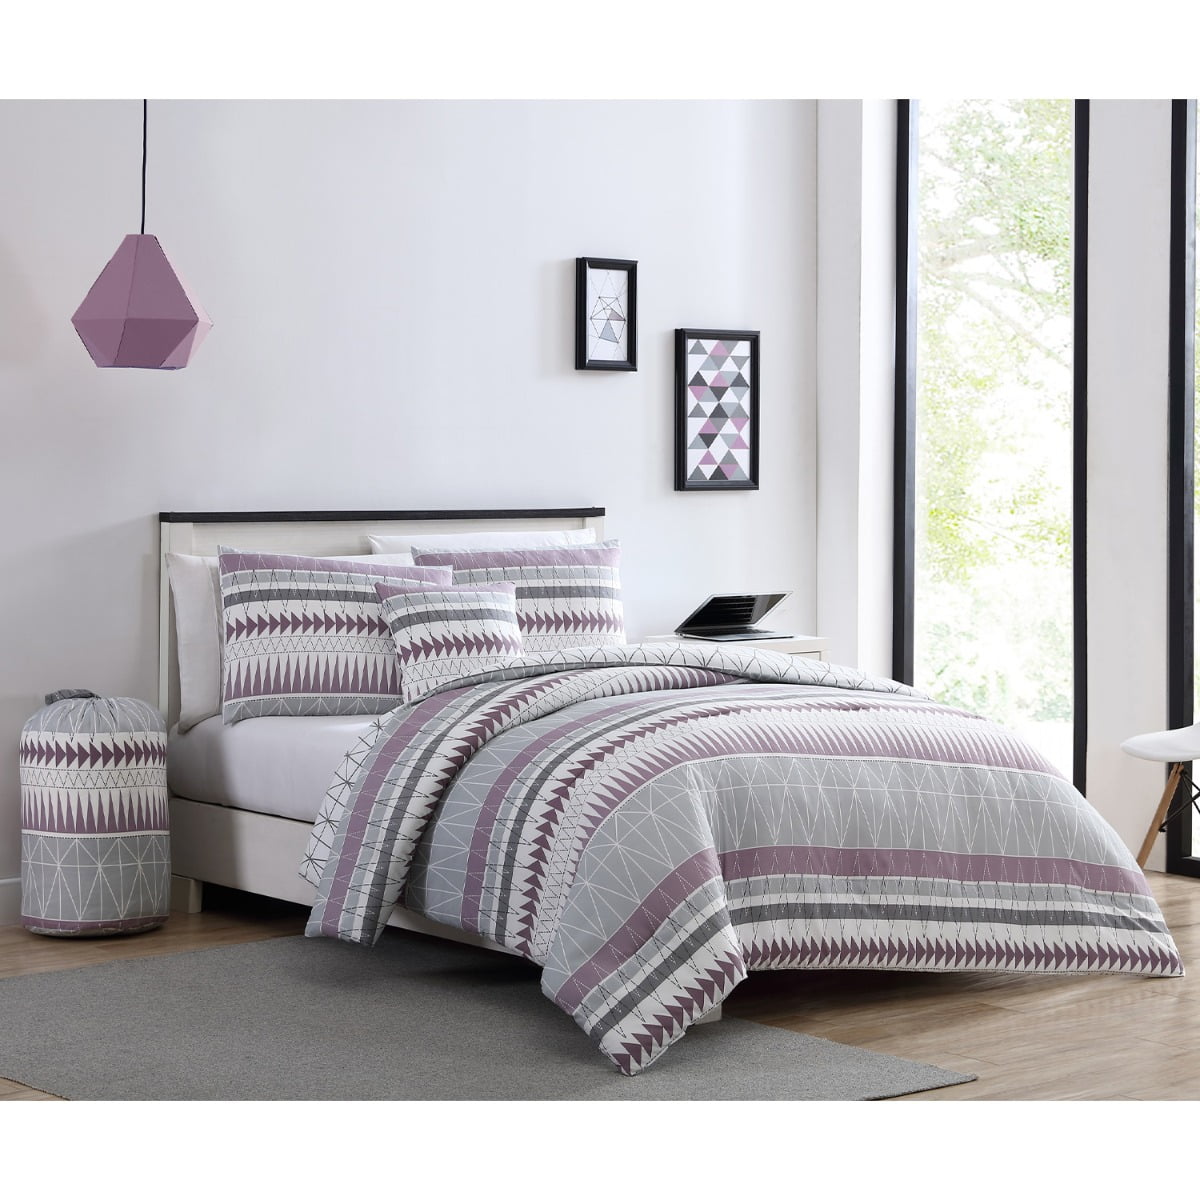 Dorm Comforter And Sham Bedding Set, Twin Xl Bed Set